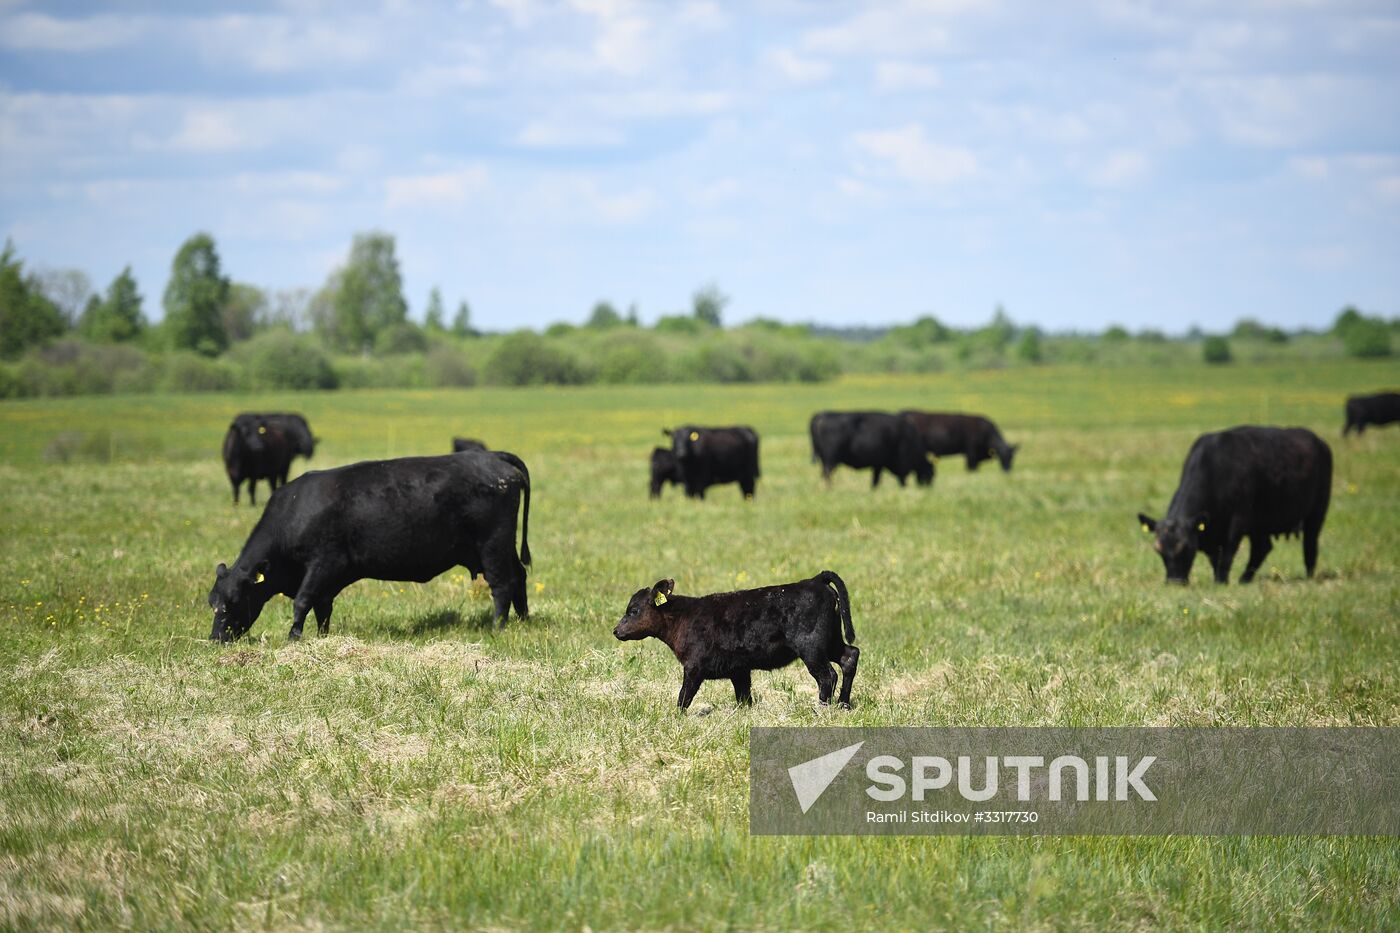 AgriVolga agricultural holding in Yaroslavl Region